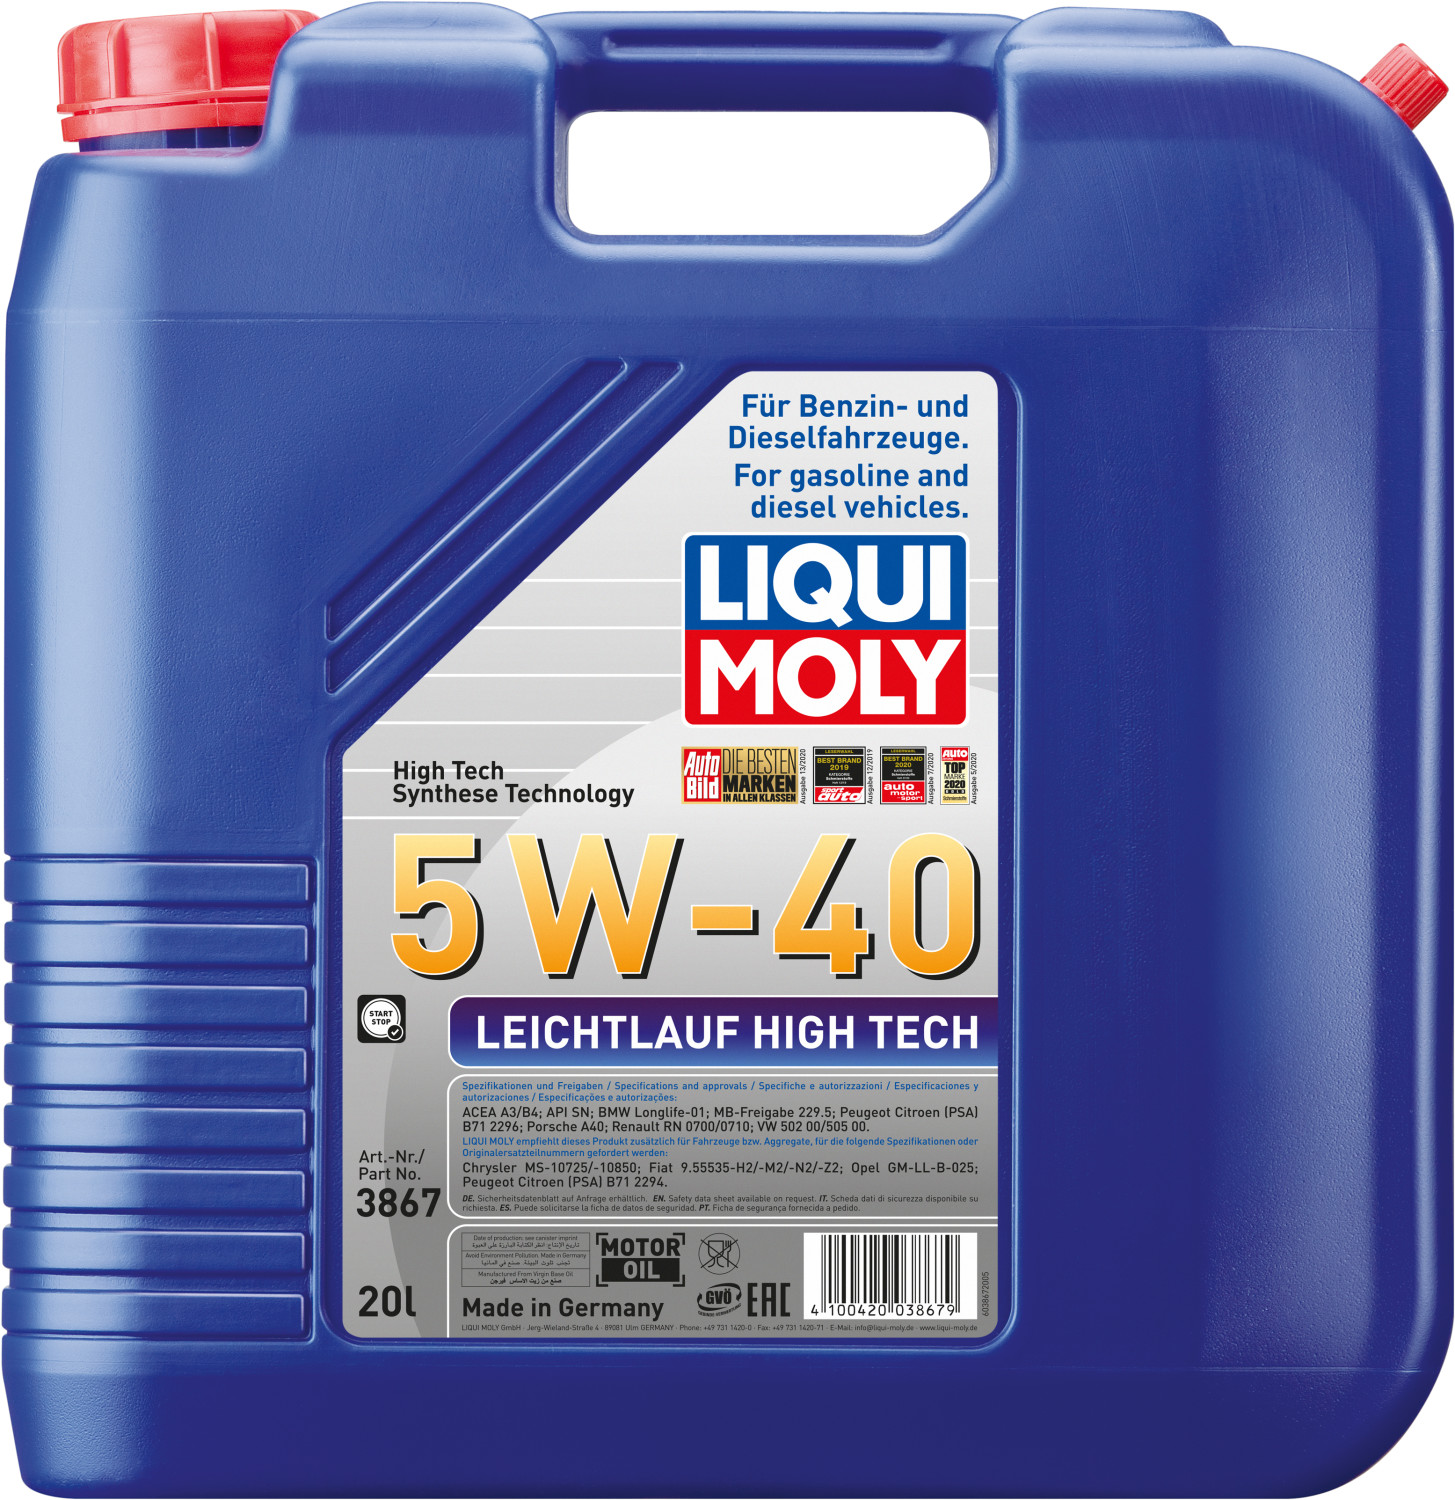 LIQUI MOLY Leichtlauf 10W-40, 1 L, Synthesetechnologie Motoröl